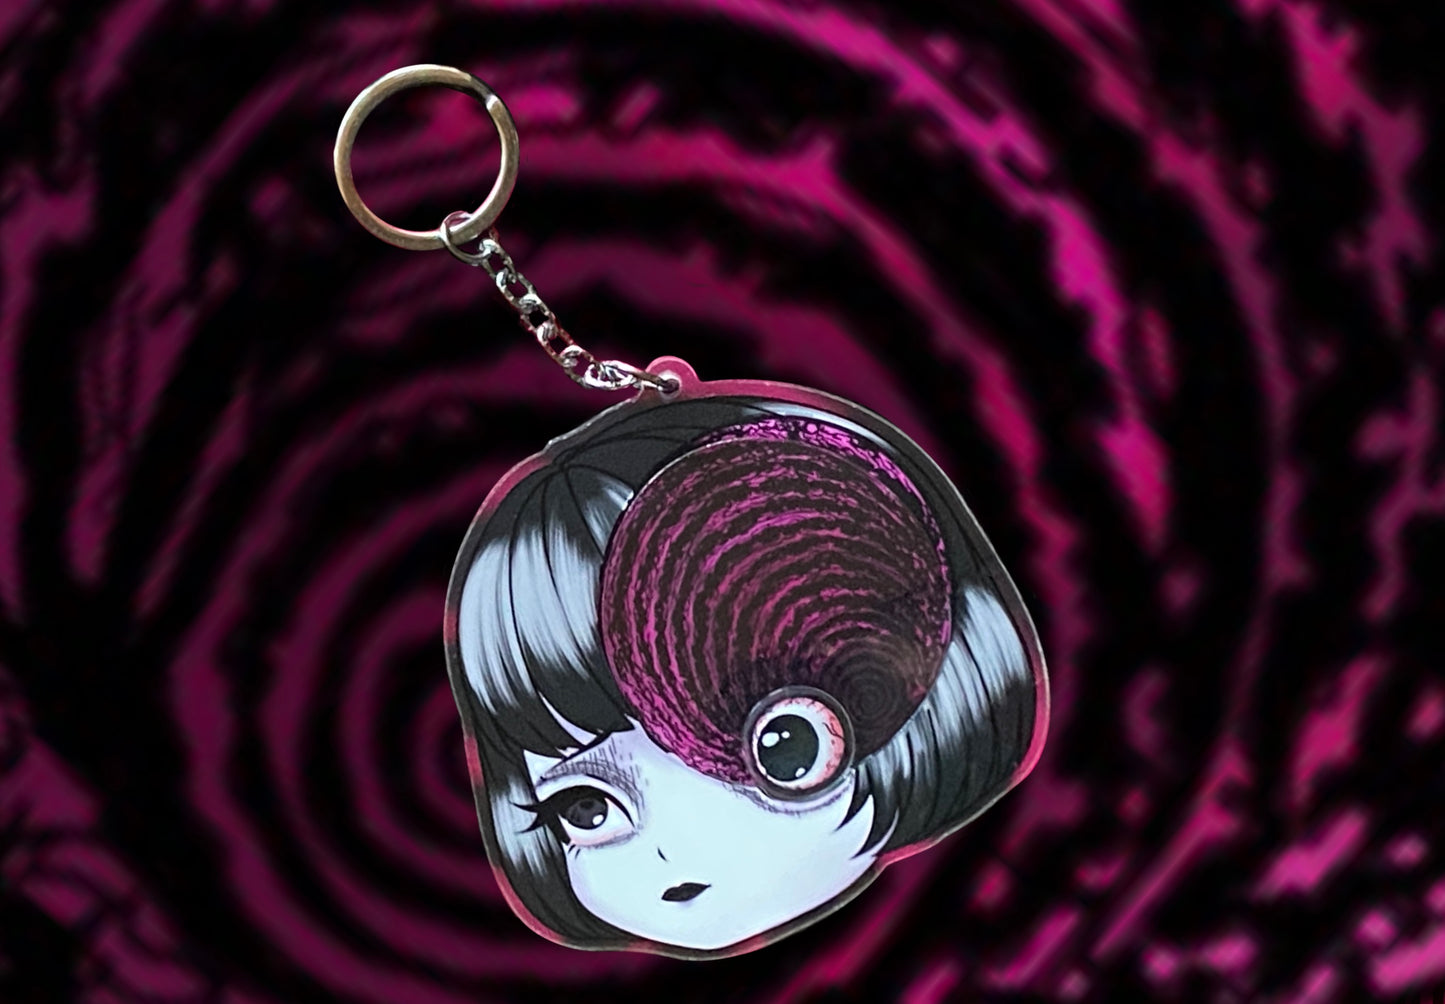 Eyeball keychain